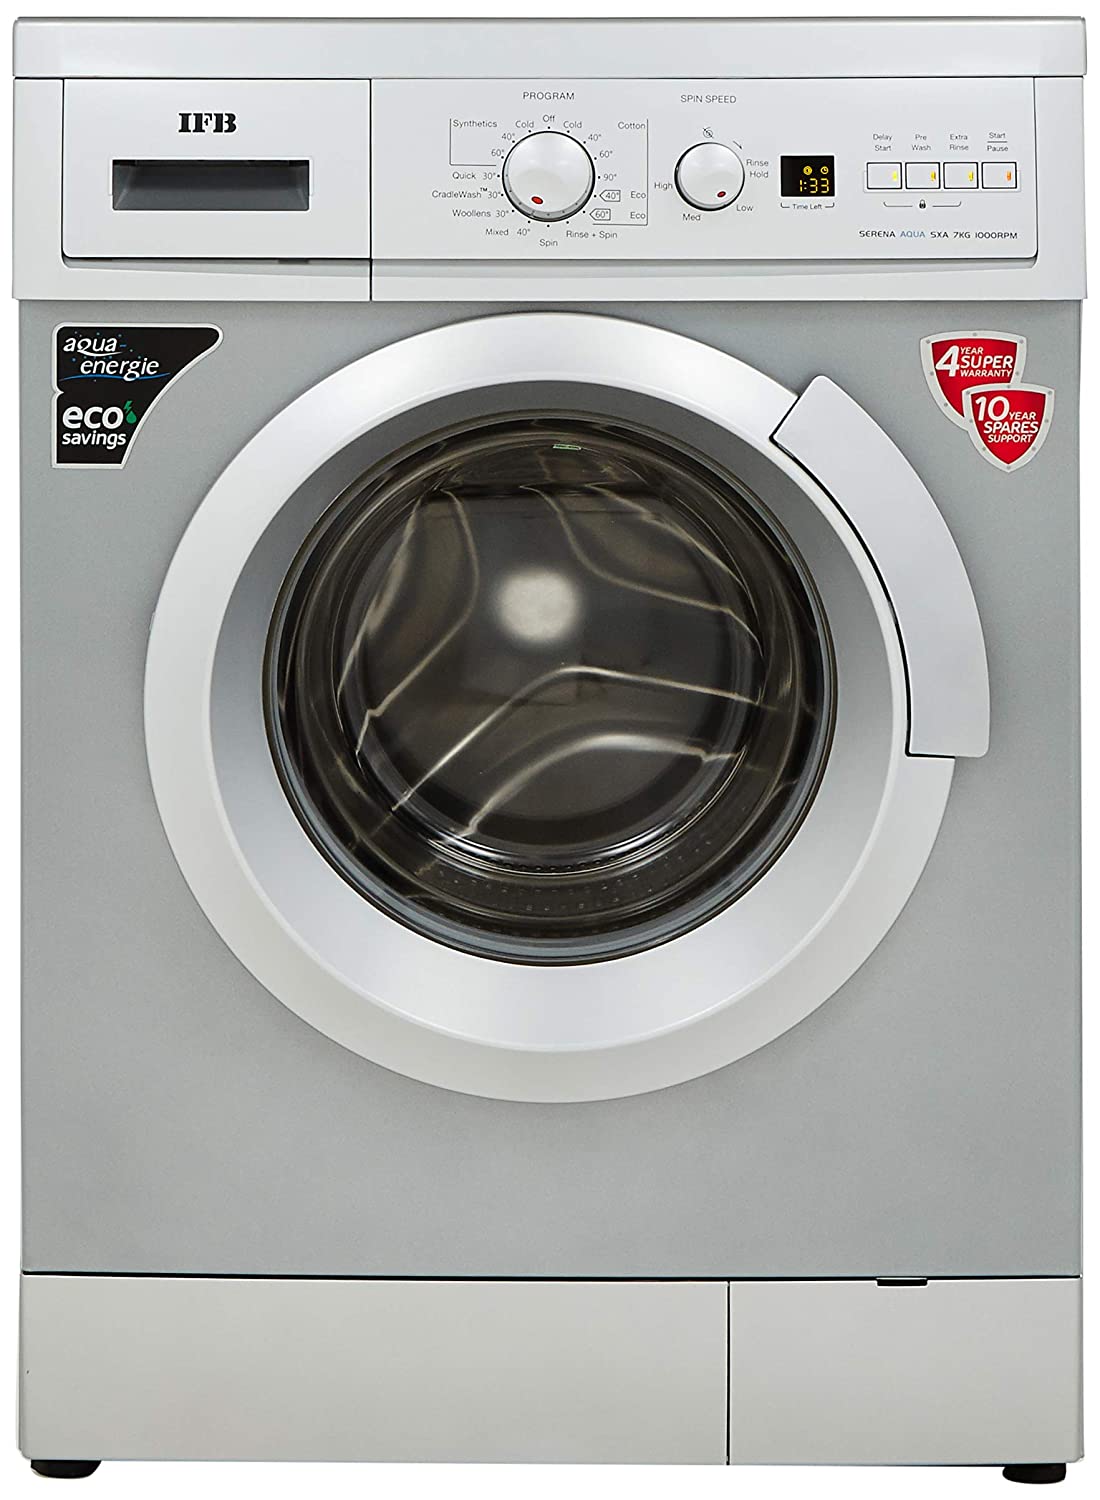 Ifb washing machine Serena Aqua Sx LDT